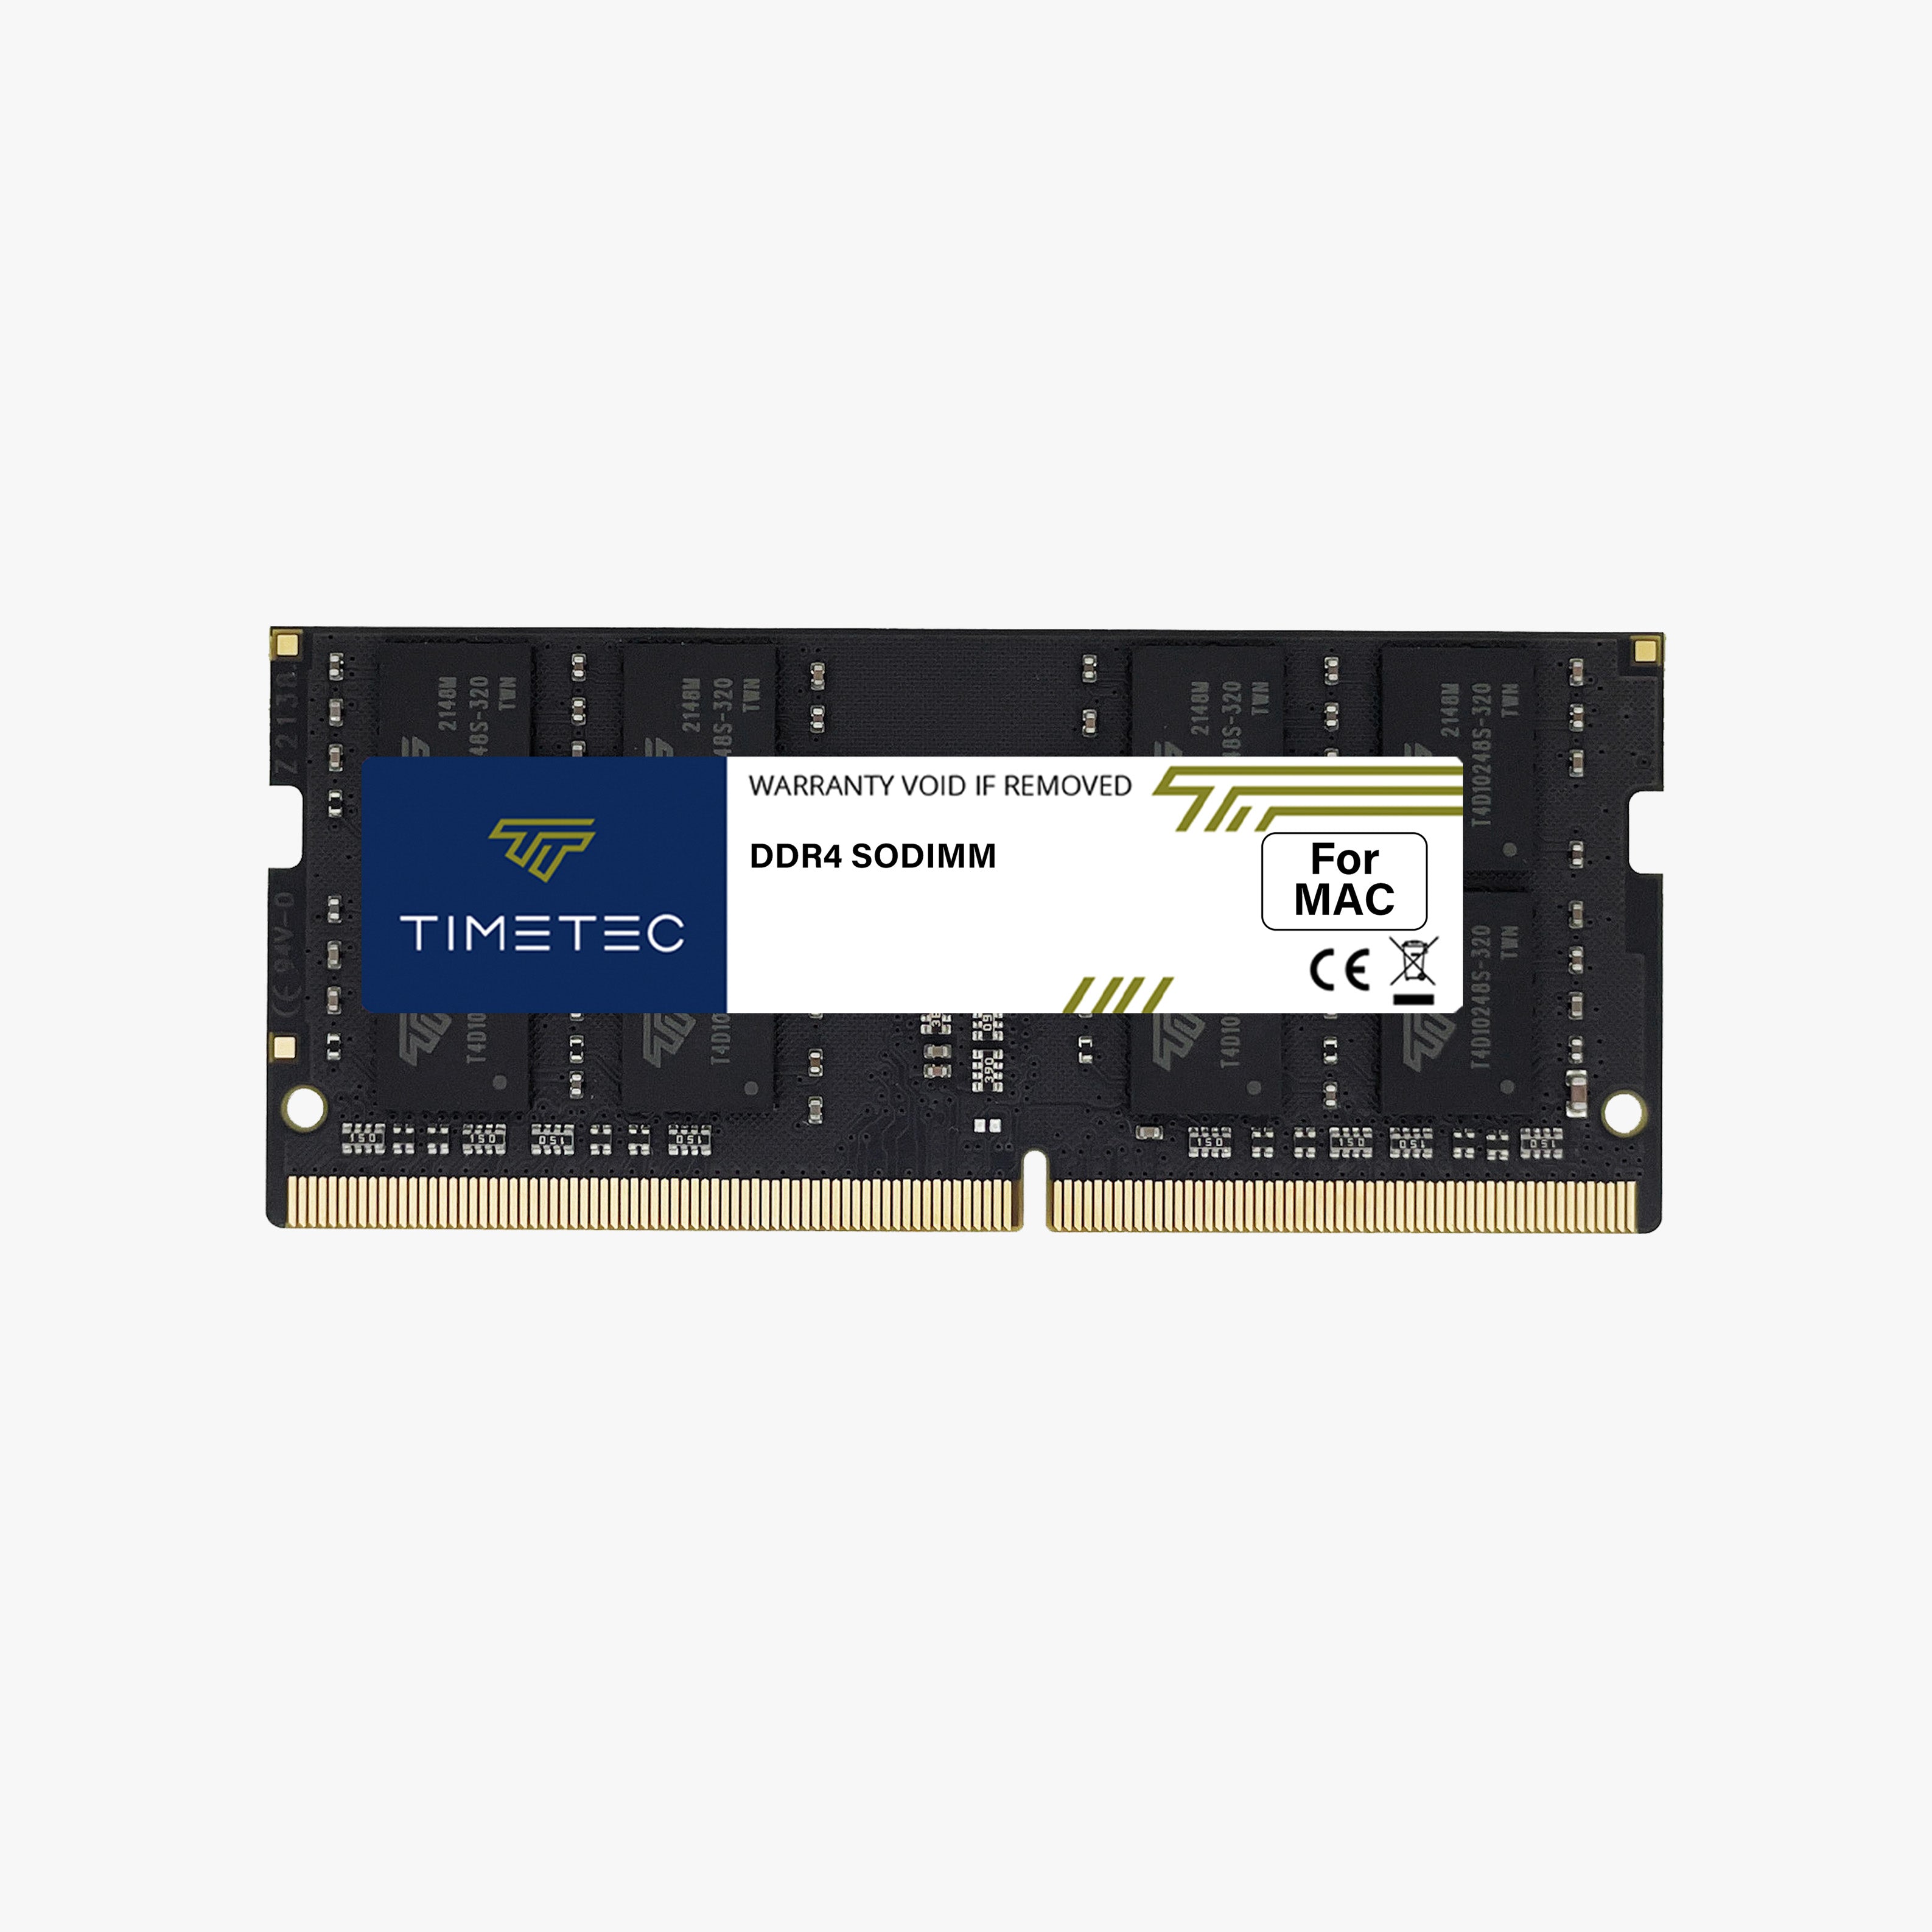 TIMETEC DDR4 SODIMM Memory FOR MAC